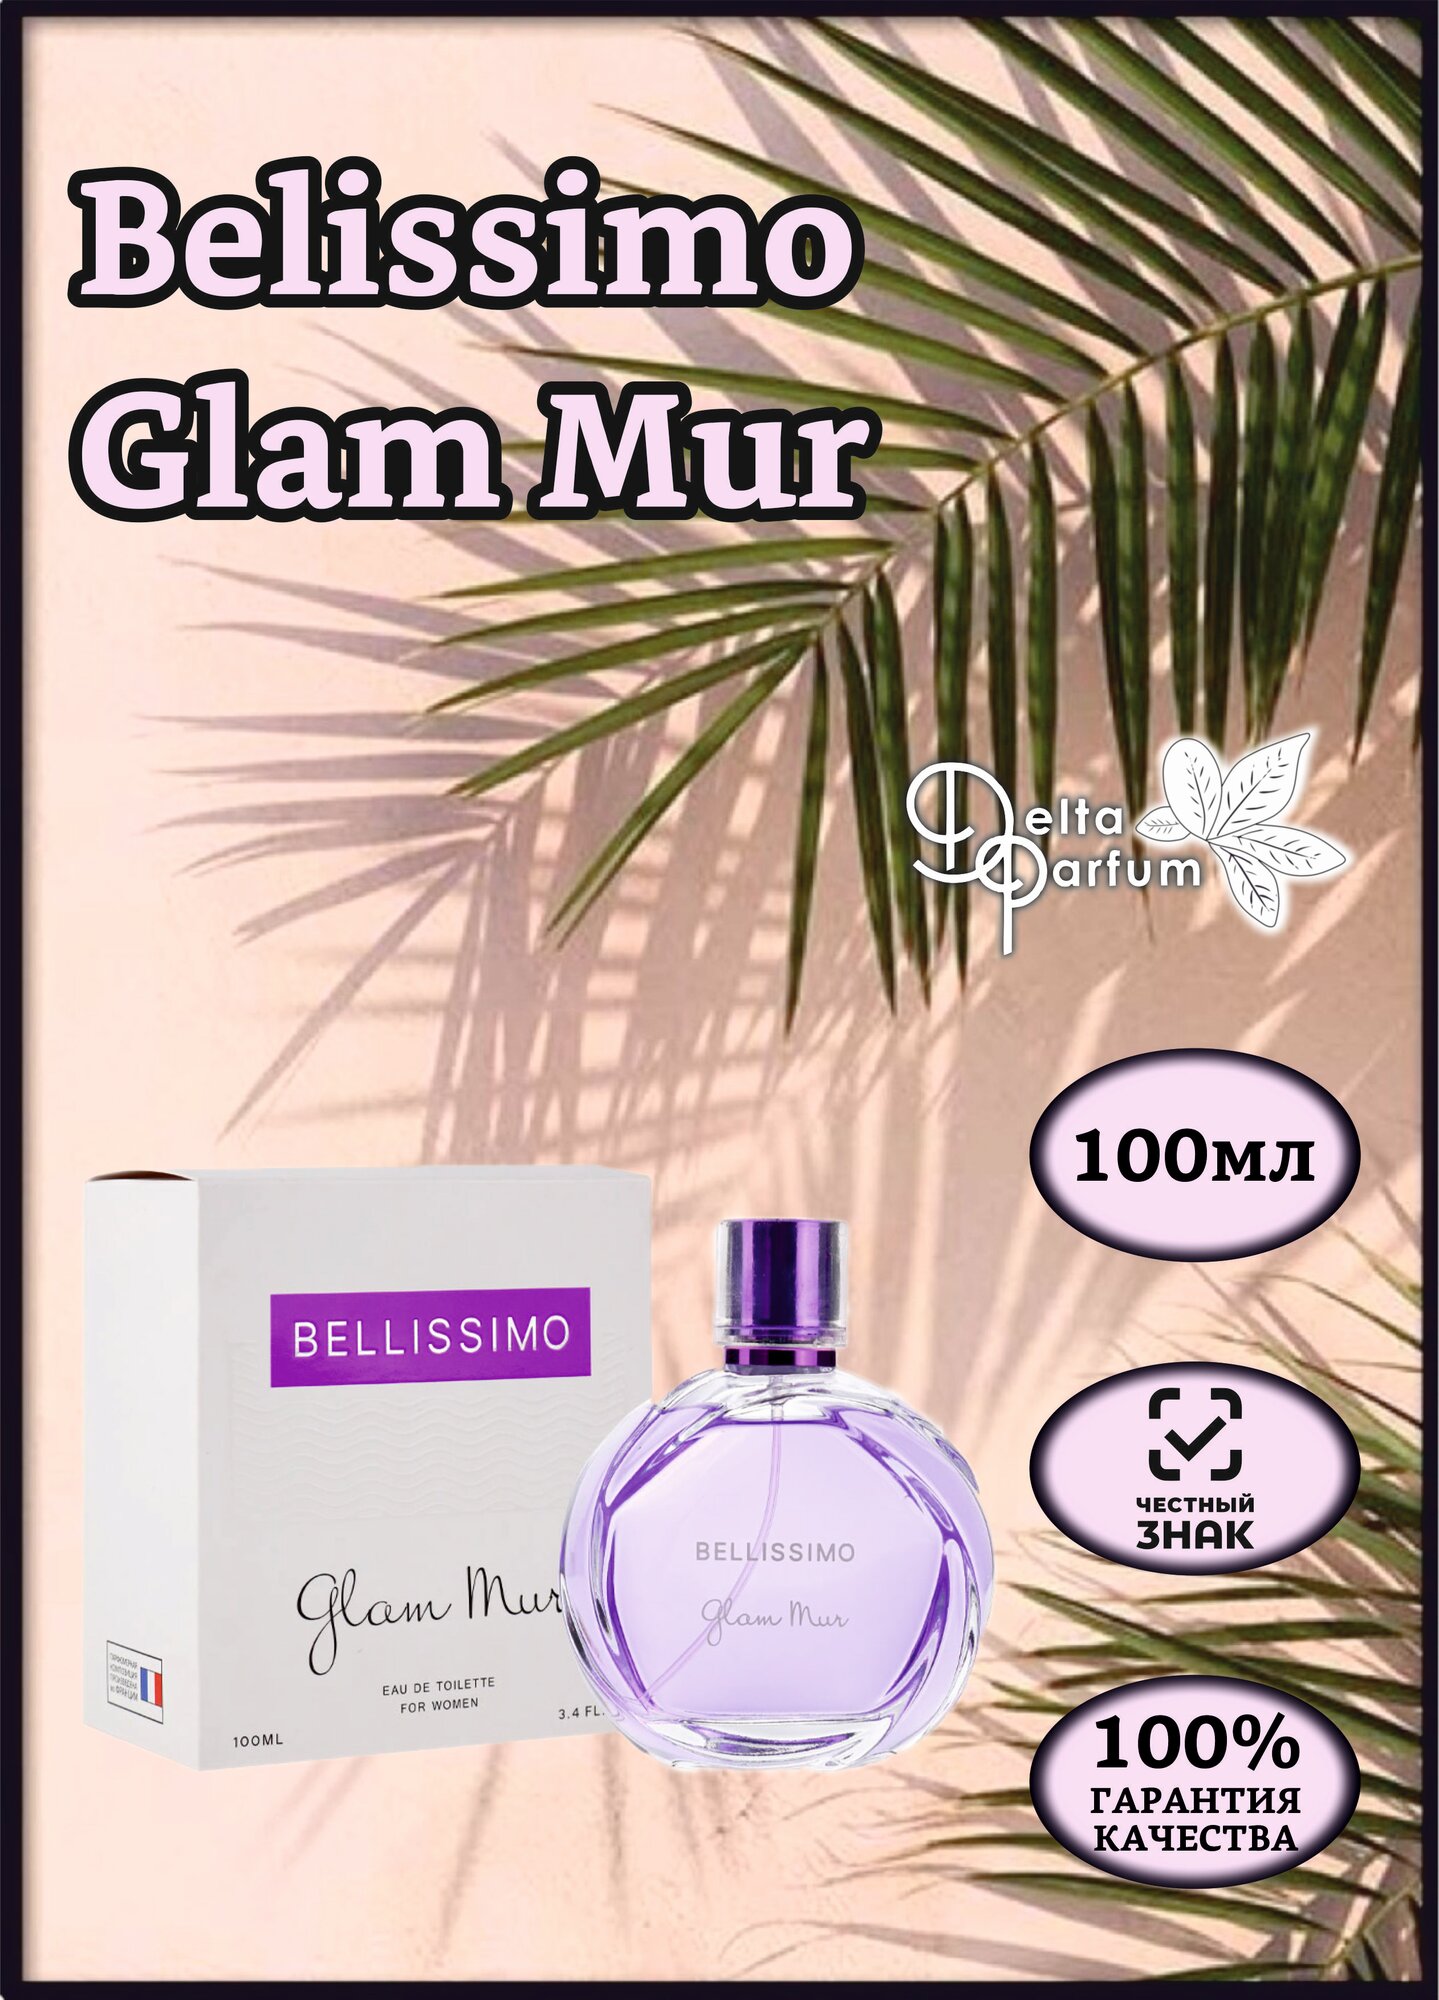 Delta parfum (Iren Adler) Туалетная вода женская Bellissimo Glam Mur, 100мл